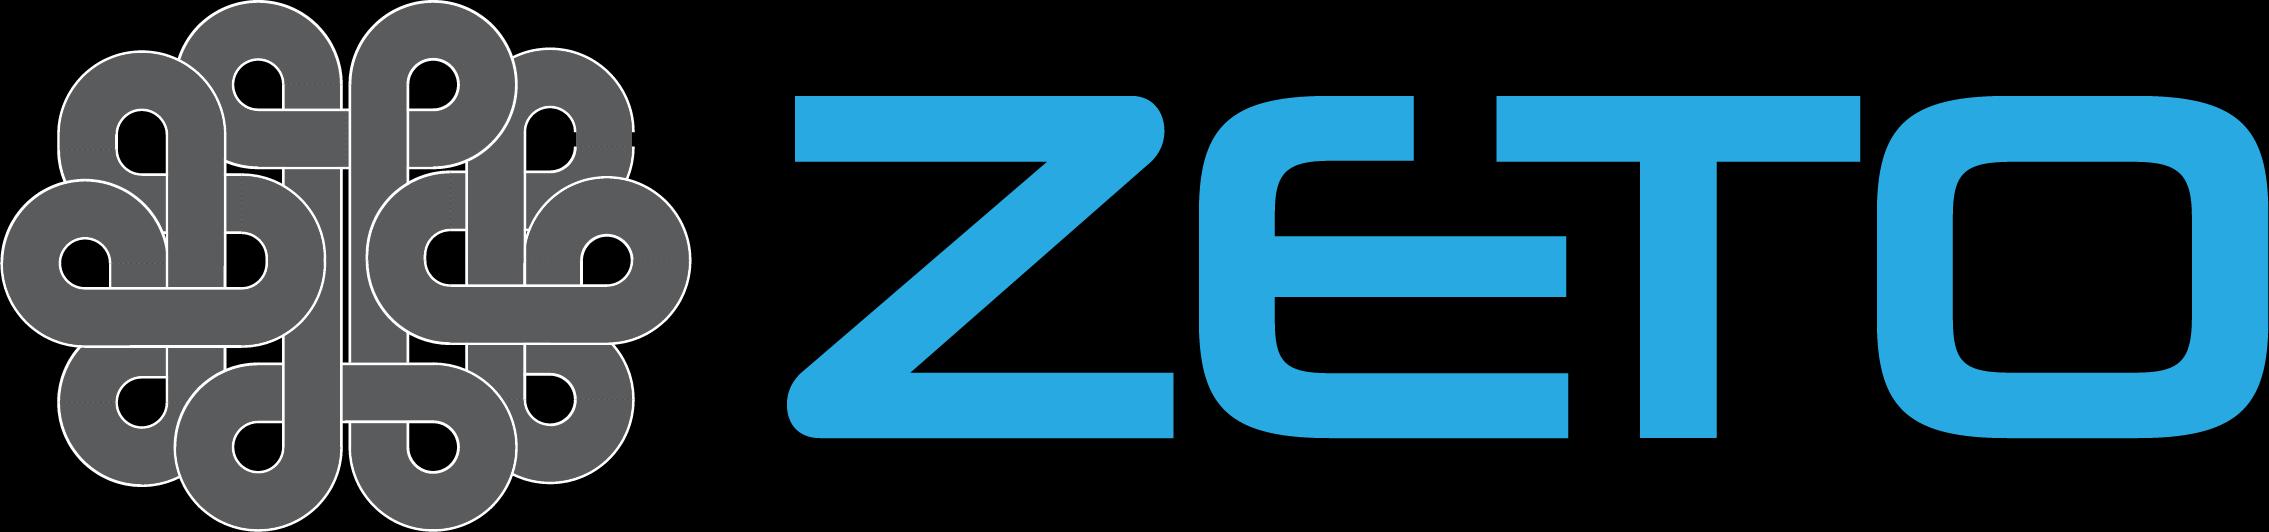 Zeto_logo